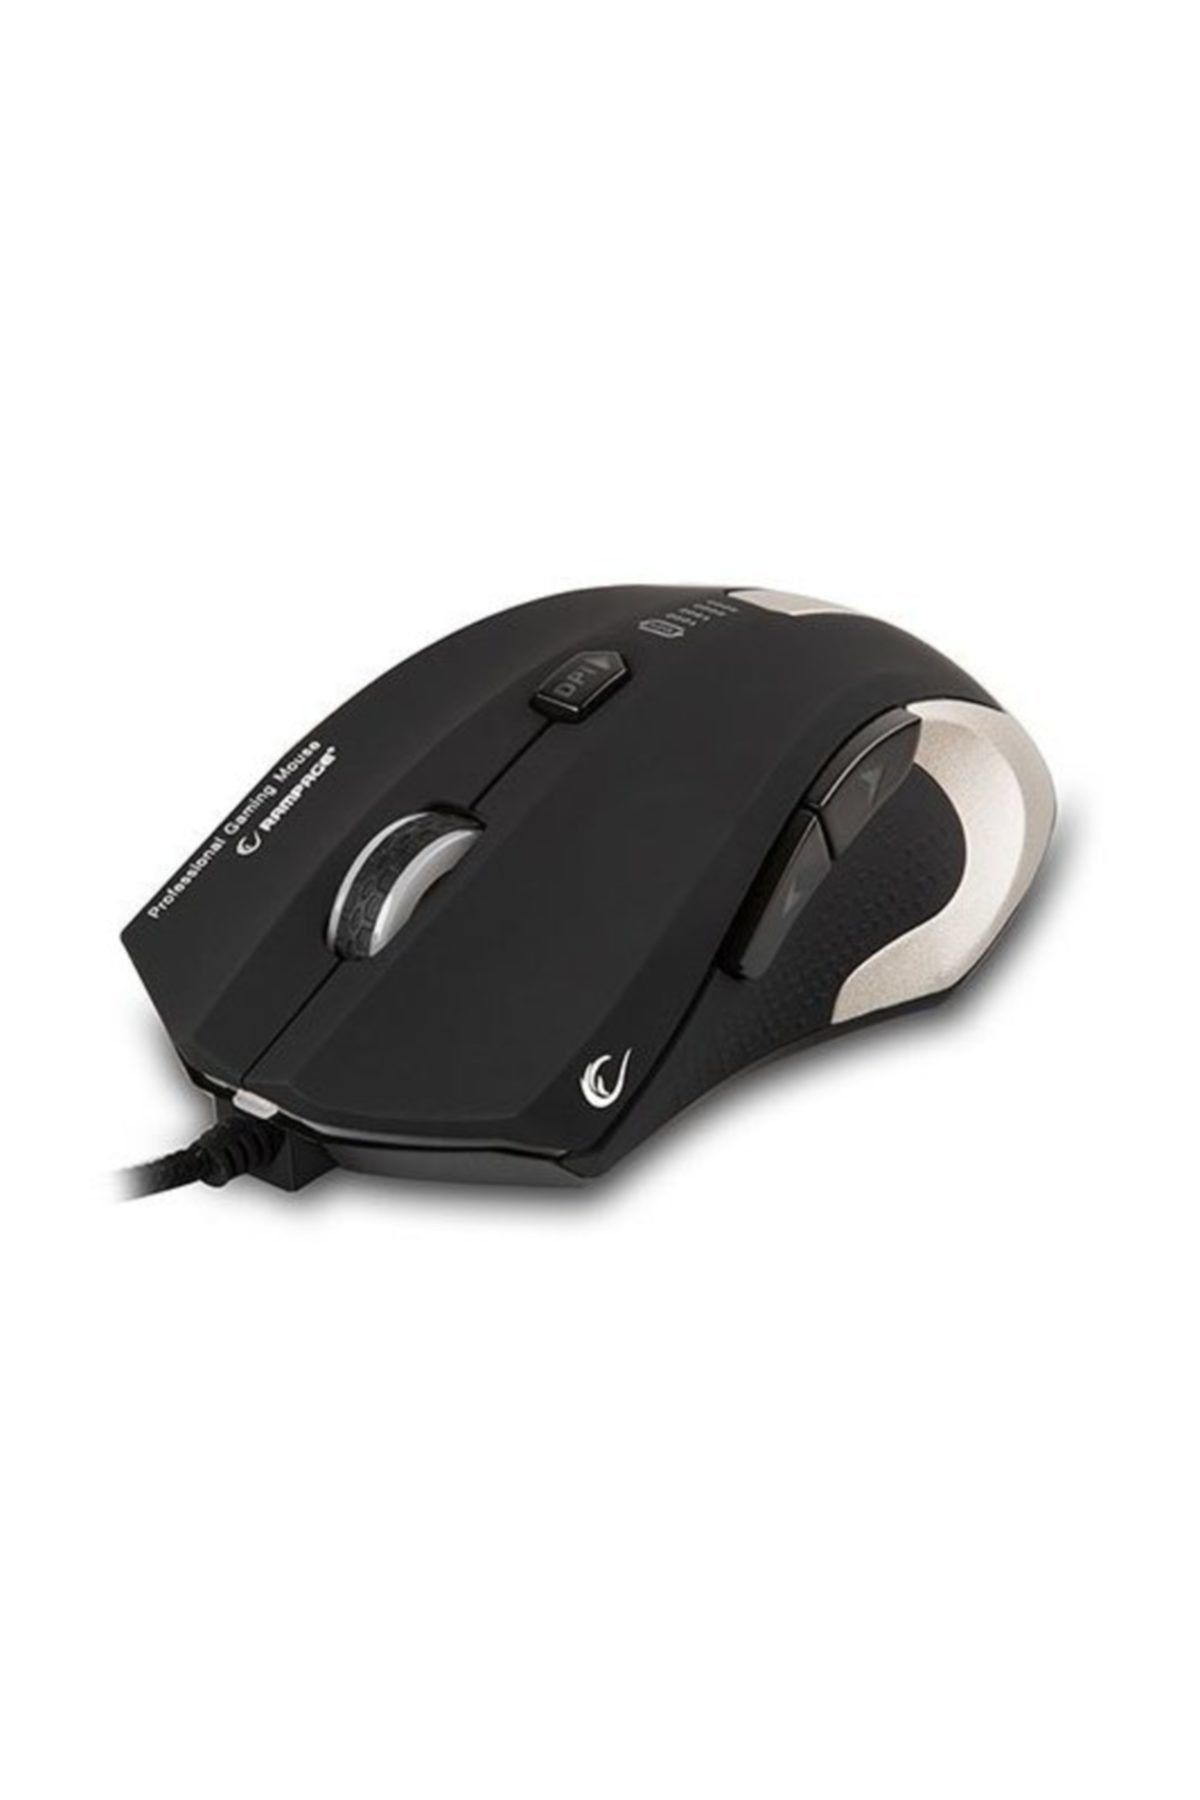 Rampage Smx-r5 Usb Parlak Metal 4000 Dpi Gaming Makrolu Oyuncu Mouse